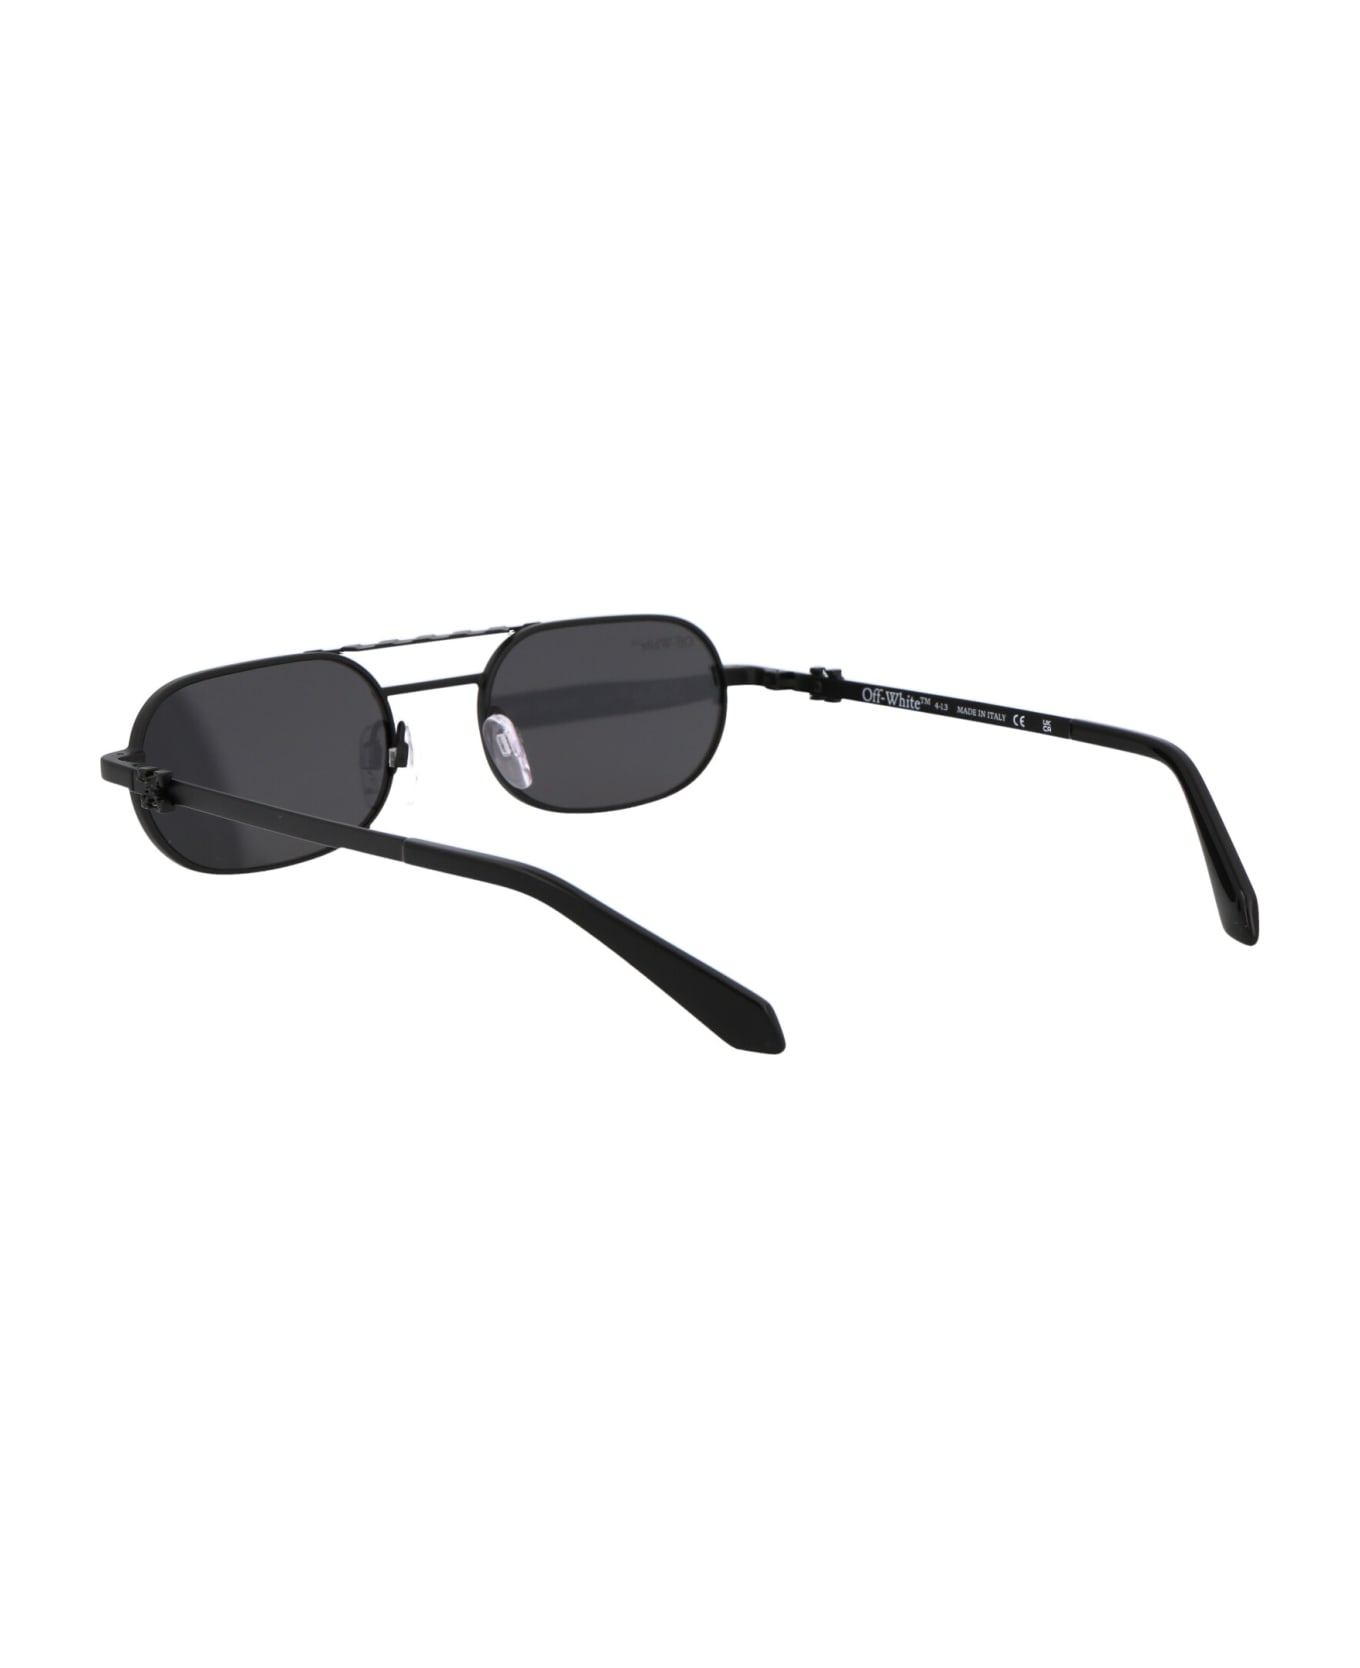 Off-White Baltimore Sunglasses - 1007 BLACK DARK GREY